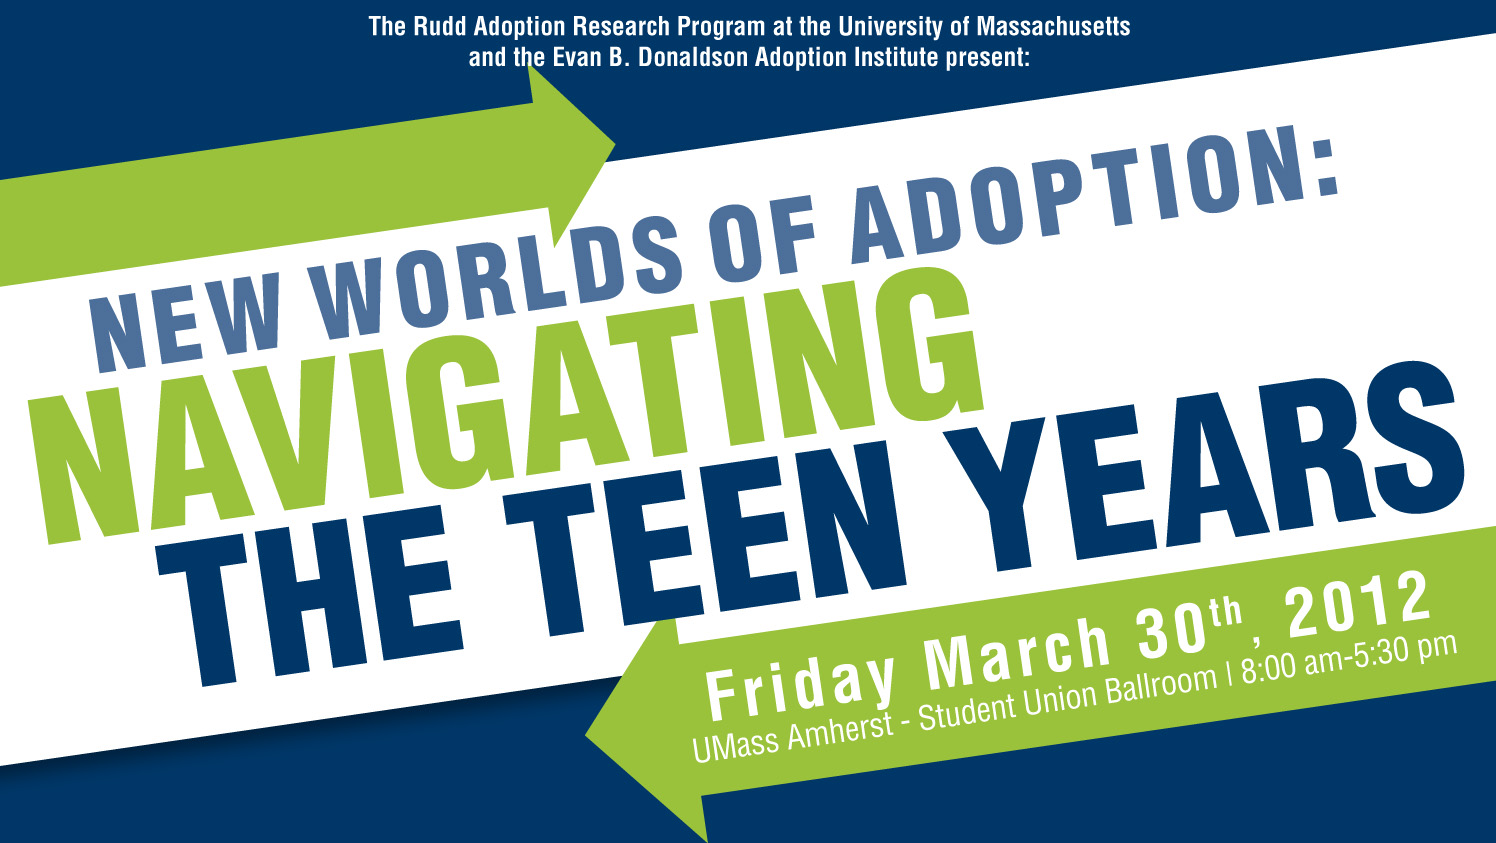 2012 Rudd Adoption Research Program Annual Conference